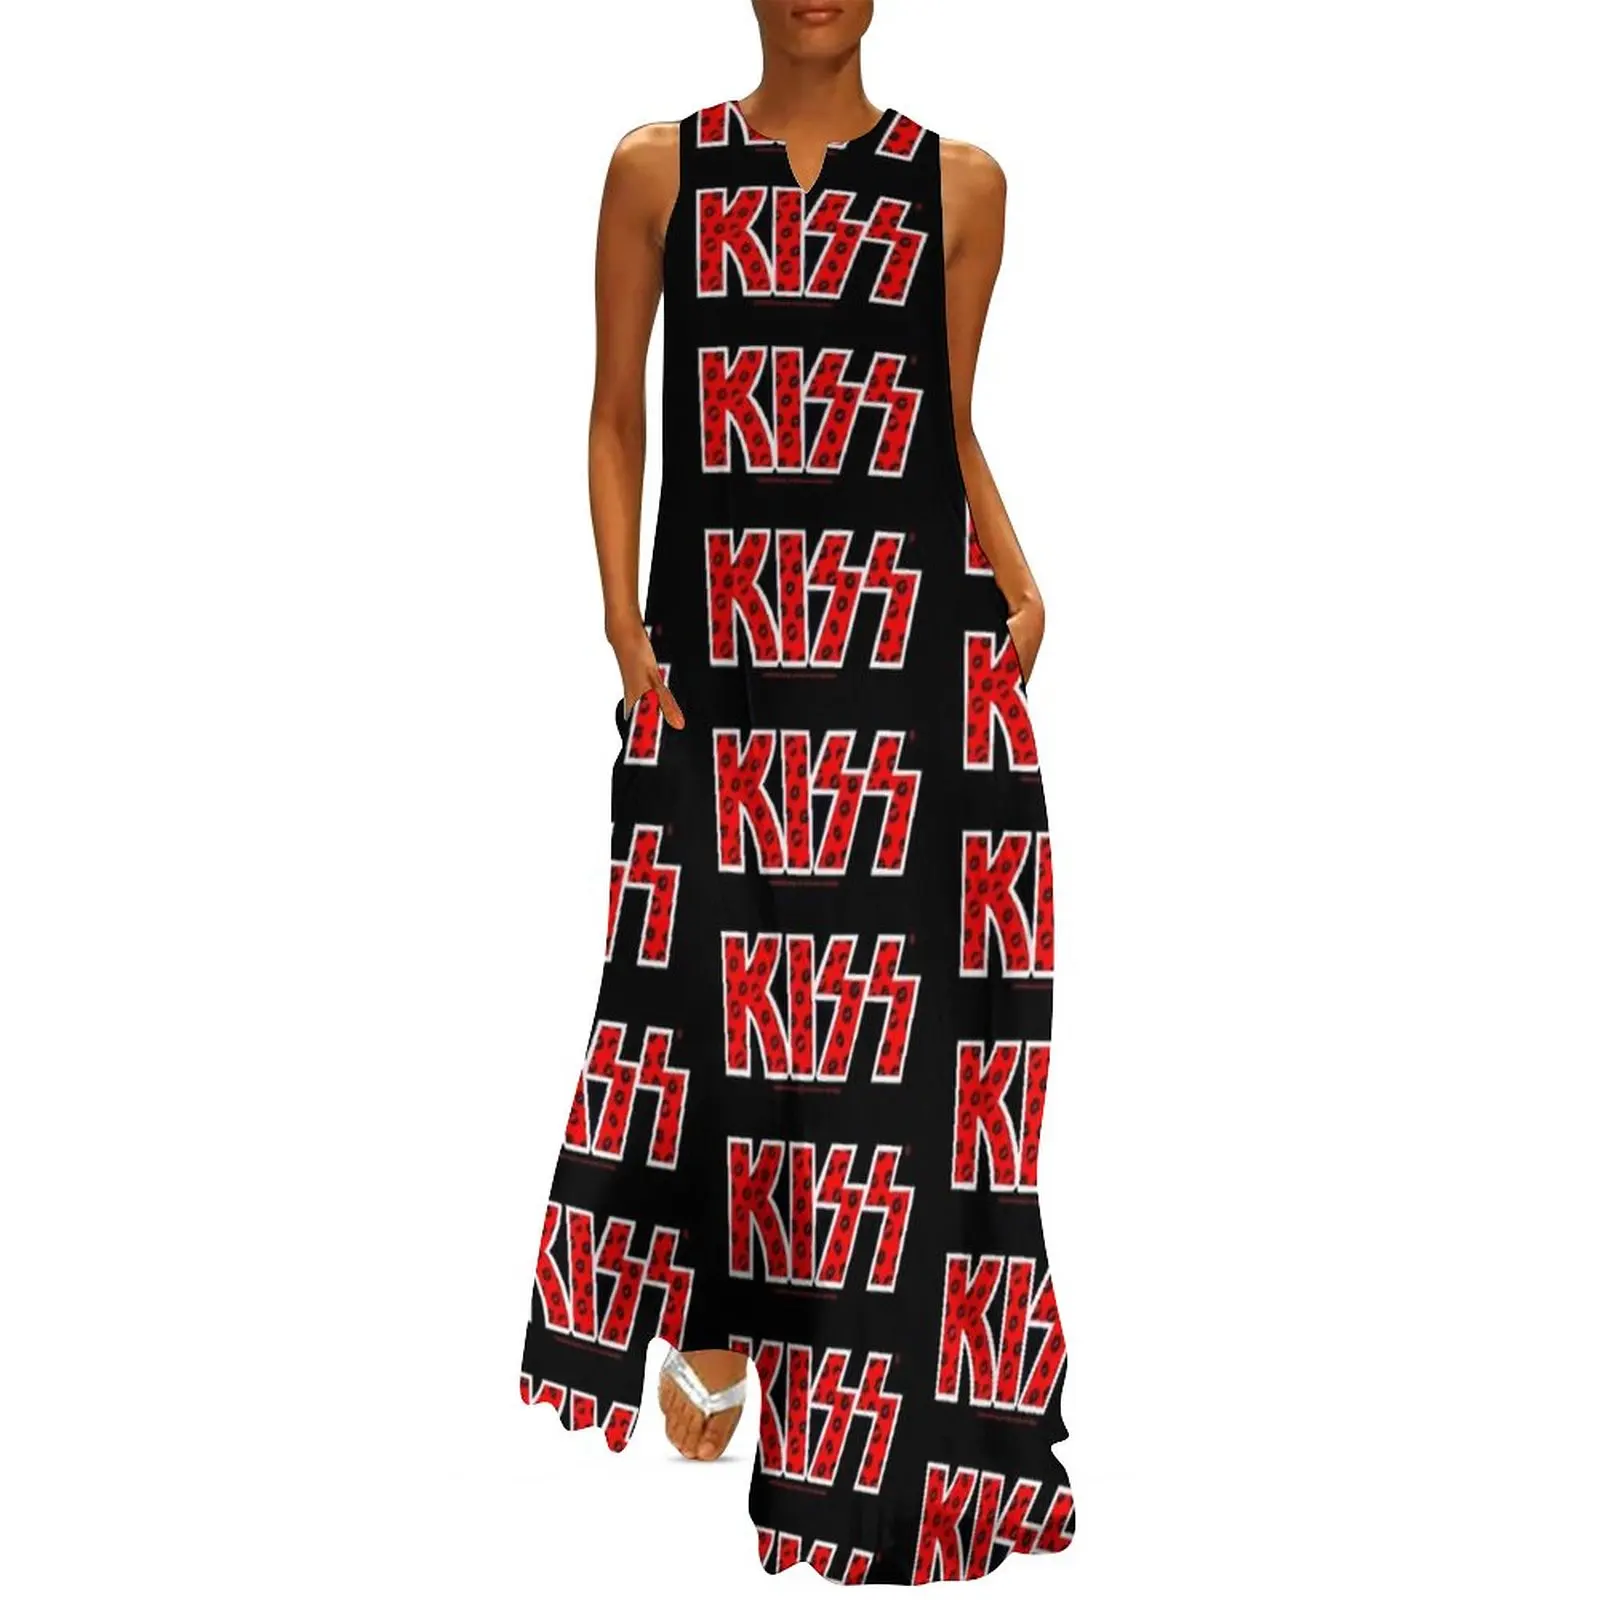 

Kiss Band Dress Summer Black Lips Logo Street Wear Bohemia Long Dresses Women Party Maxi Dress Gift Idea